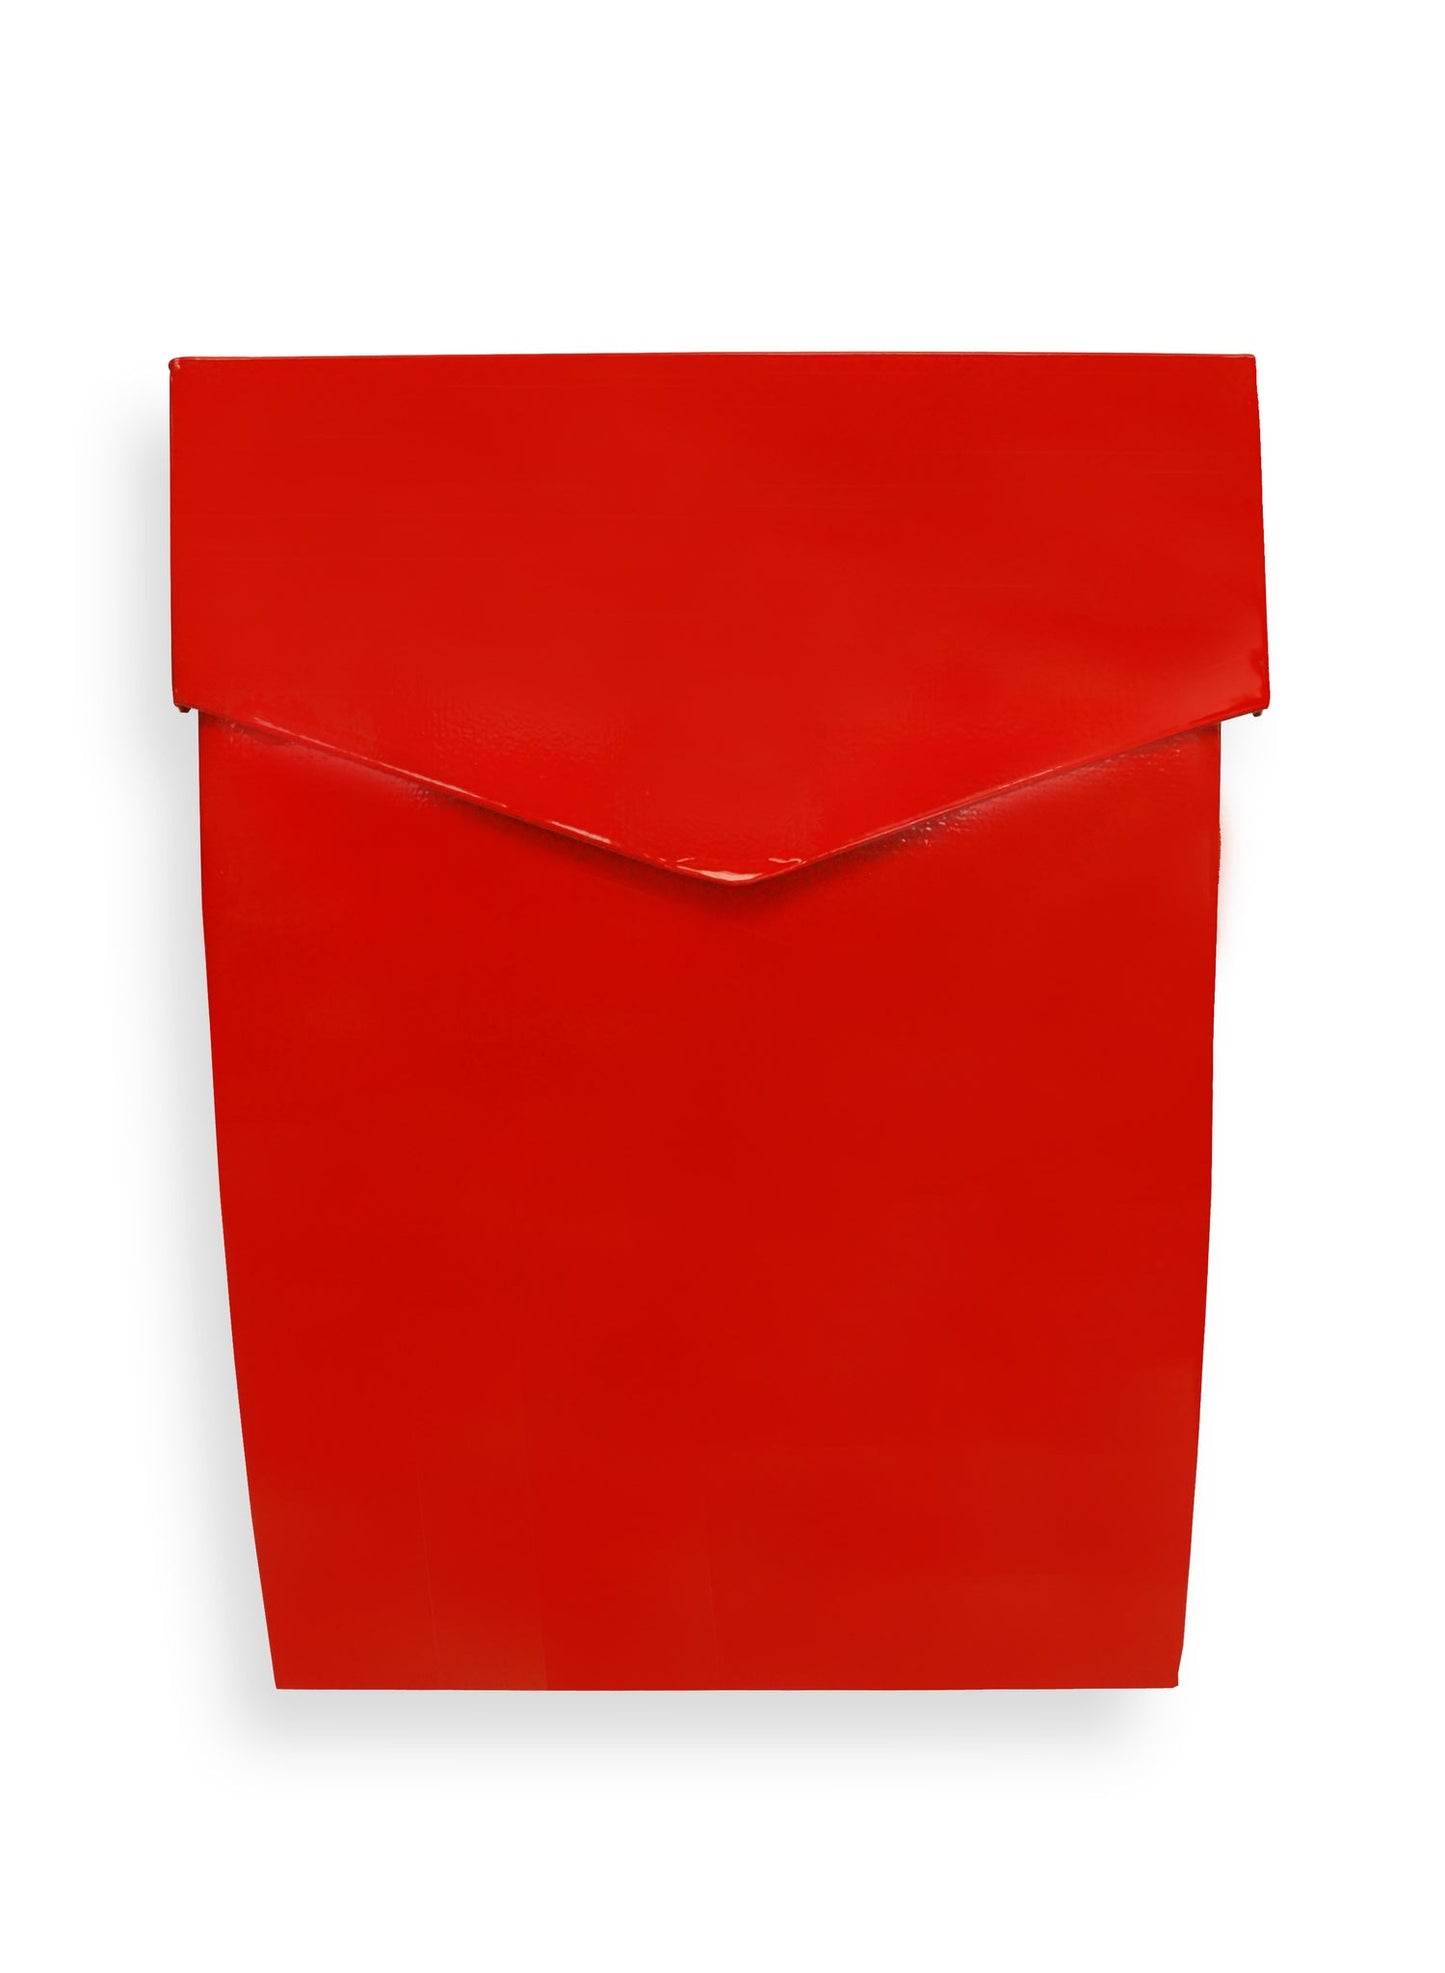 Bradly Steel Mailbox Red, Last Chance